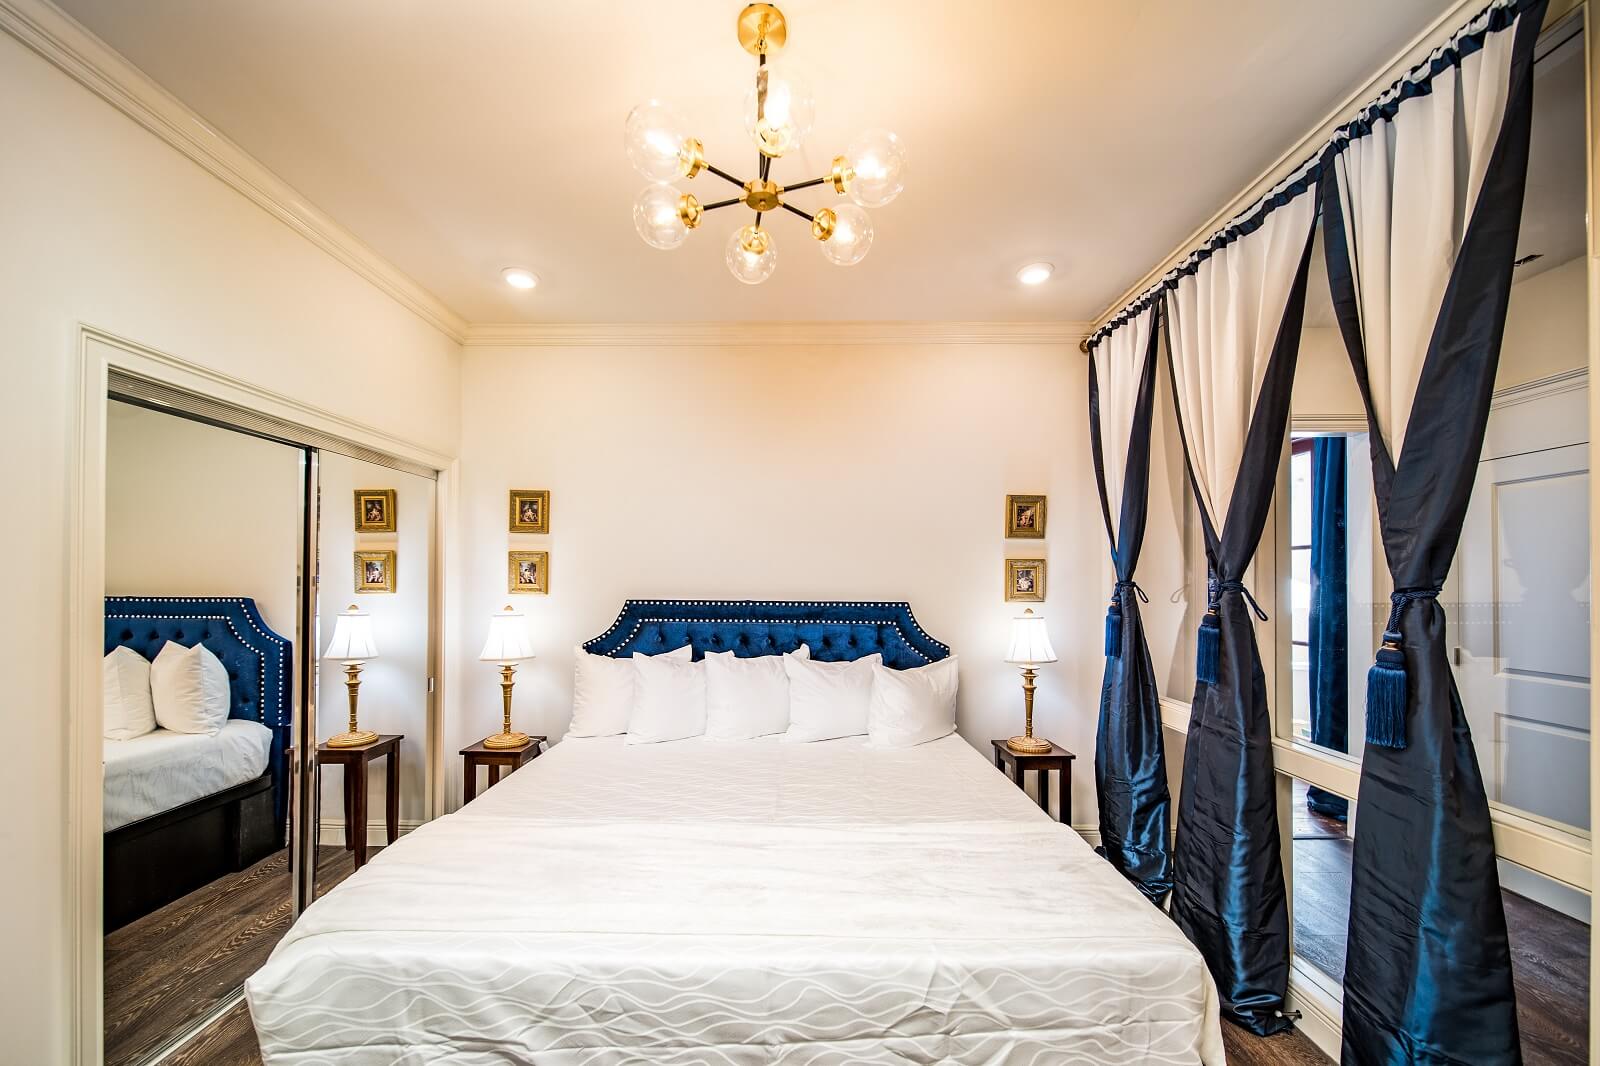 The Alexandre Unit 402 bedrooom, a New Orleans luxury rental.